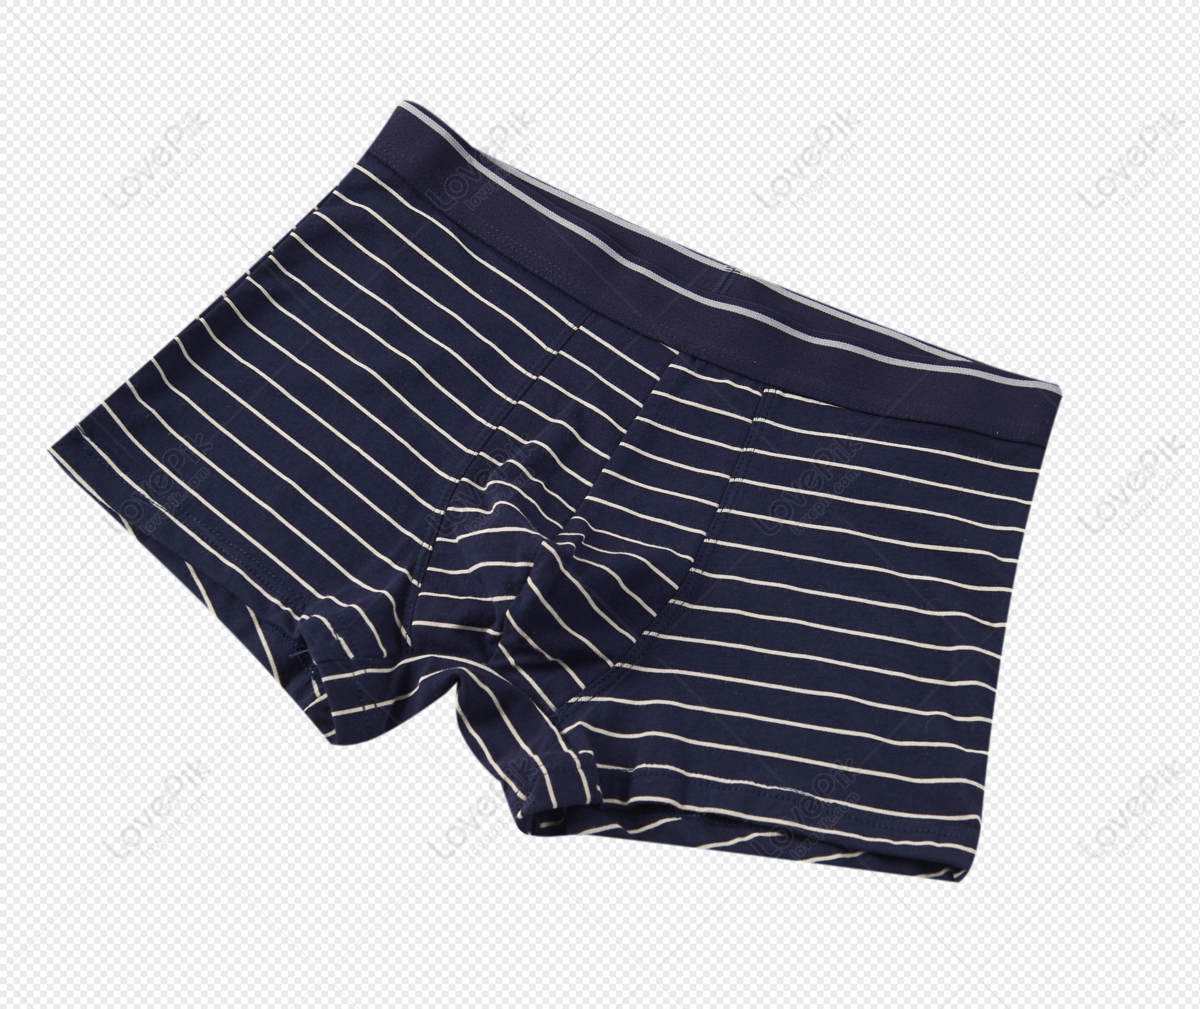 Men Underpants Vector PNG Images, Mens Underpants Man Clothing Underwear,  Briefs, Doodle, Undergarment PNG Image For Free Download